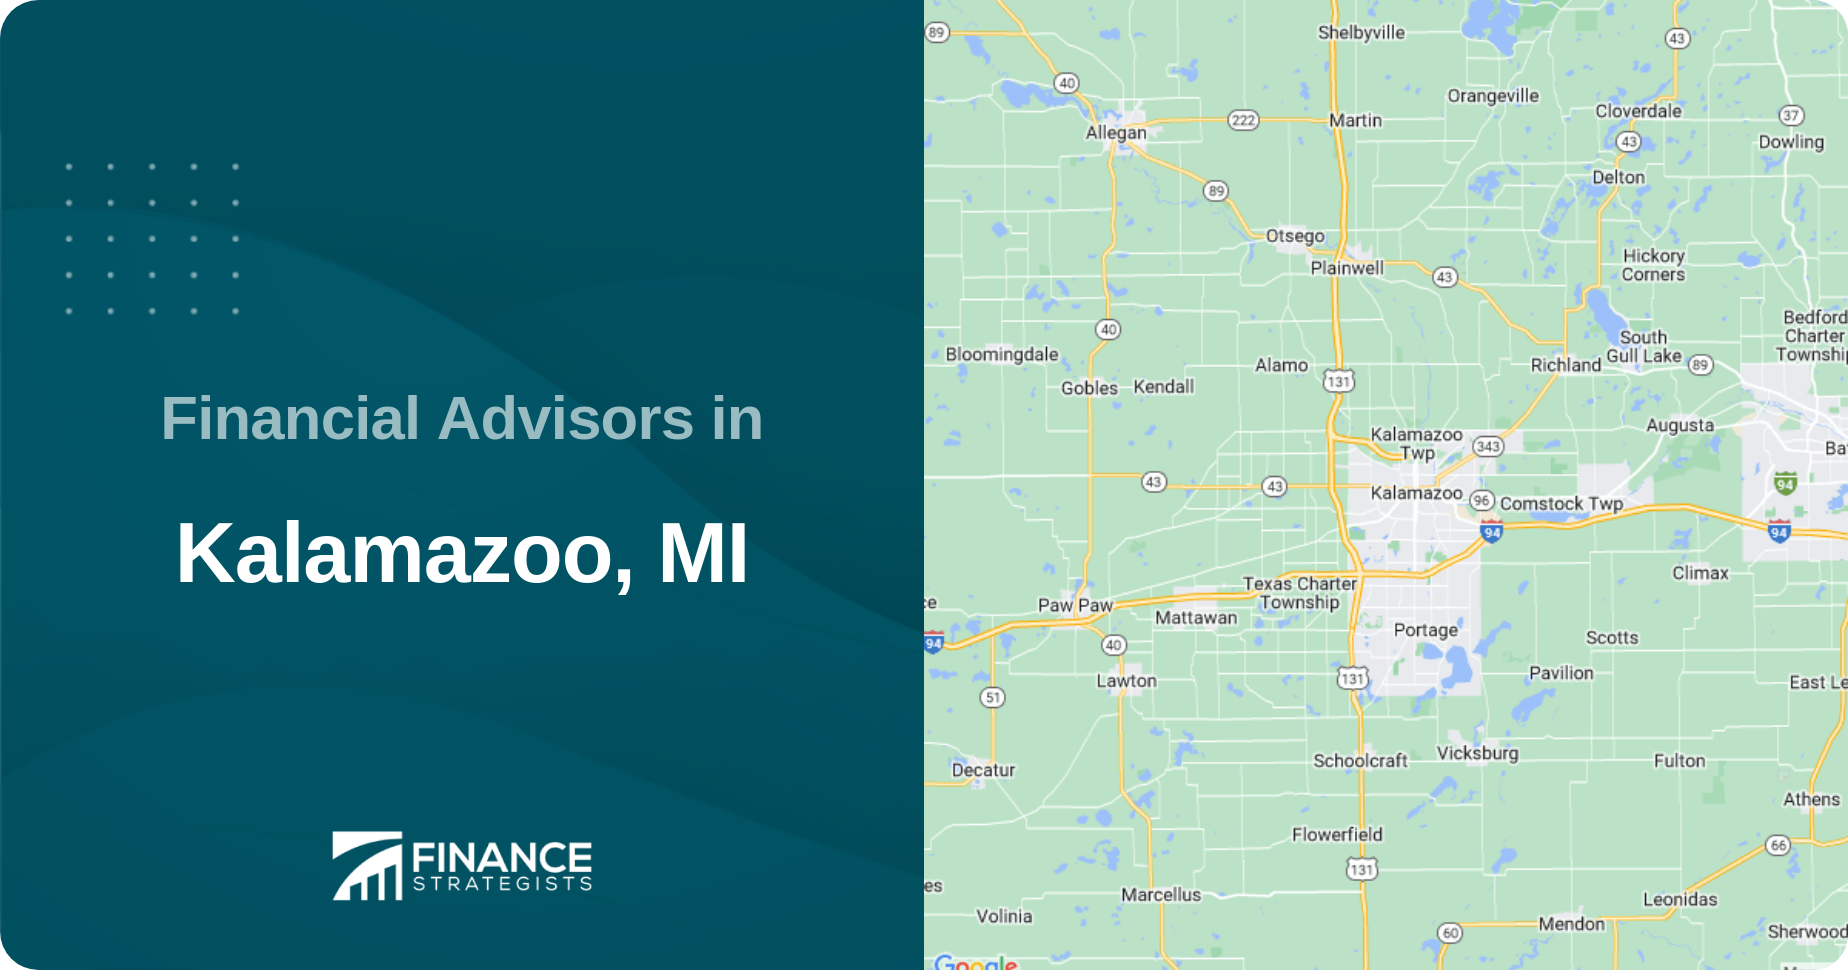 Financial Advisors in Kalamazoo, MI